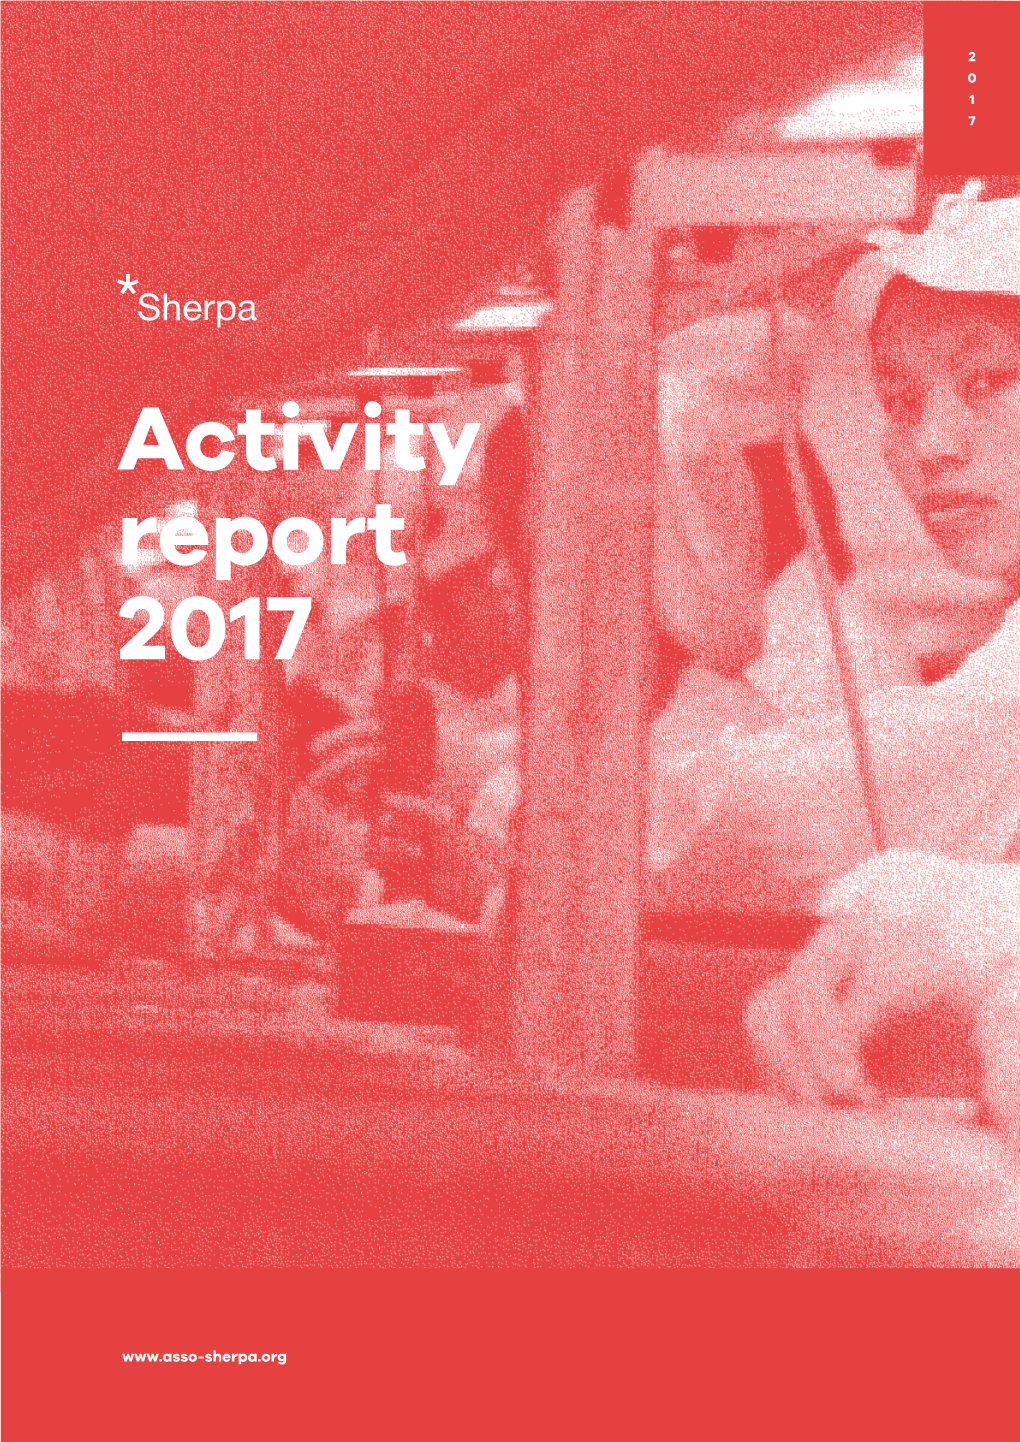 2017 Activity Report